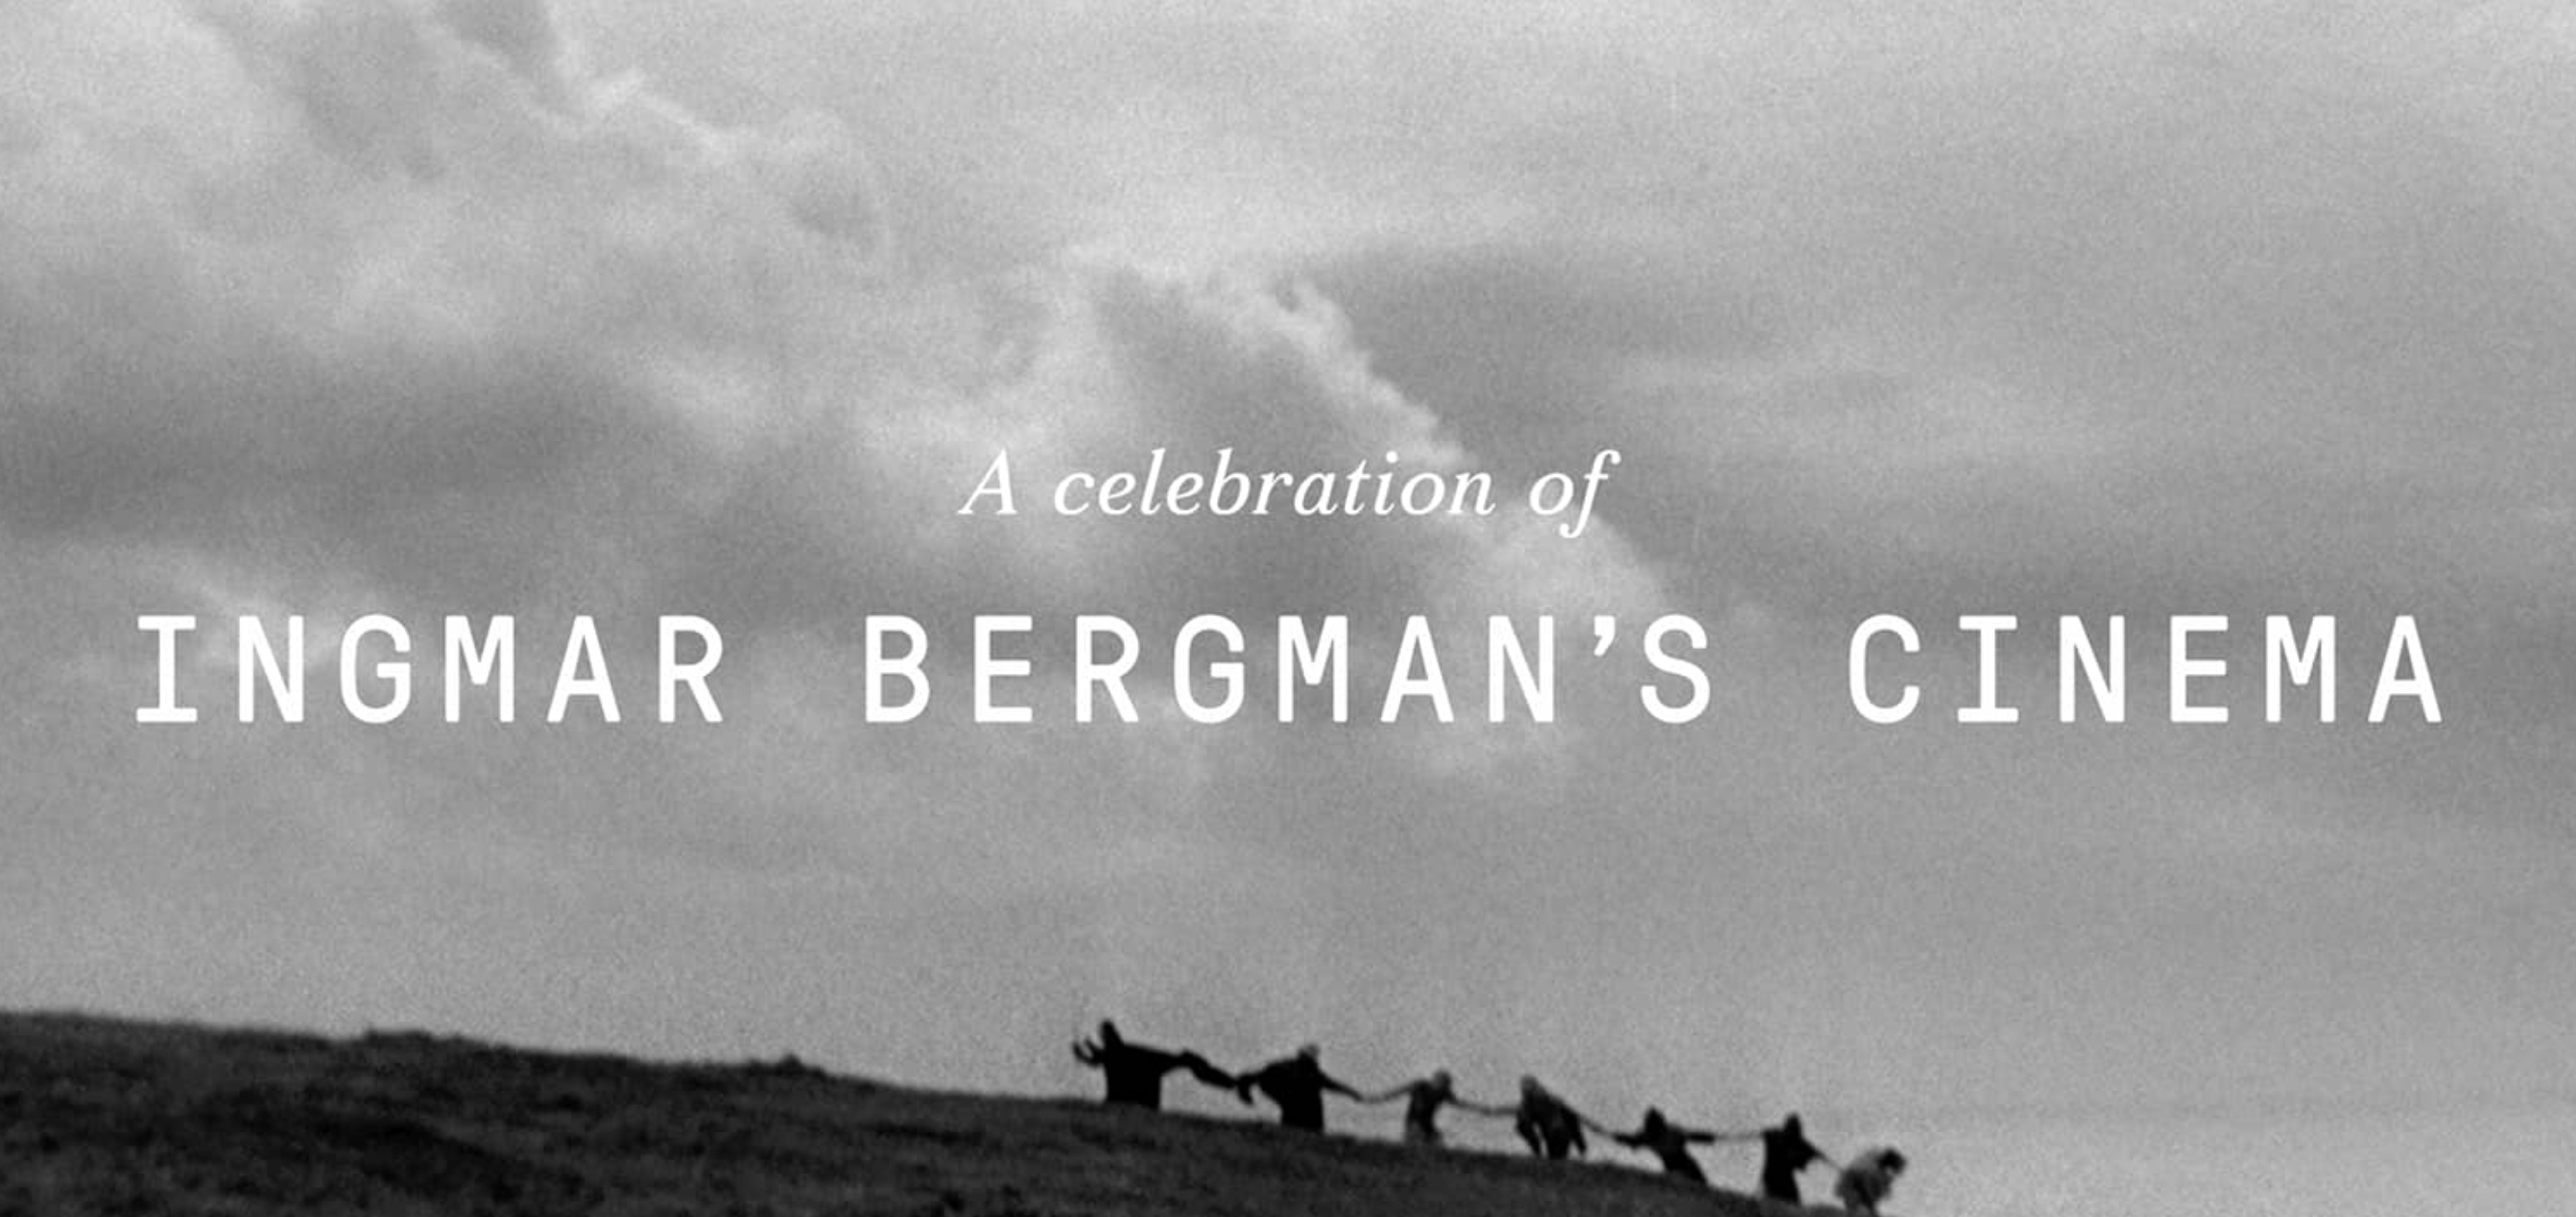 Ingmar Bergman, Criterion collection, Box set, Centenary celebration, 2690x1270 Dual Screen Desktop